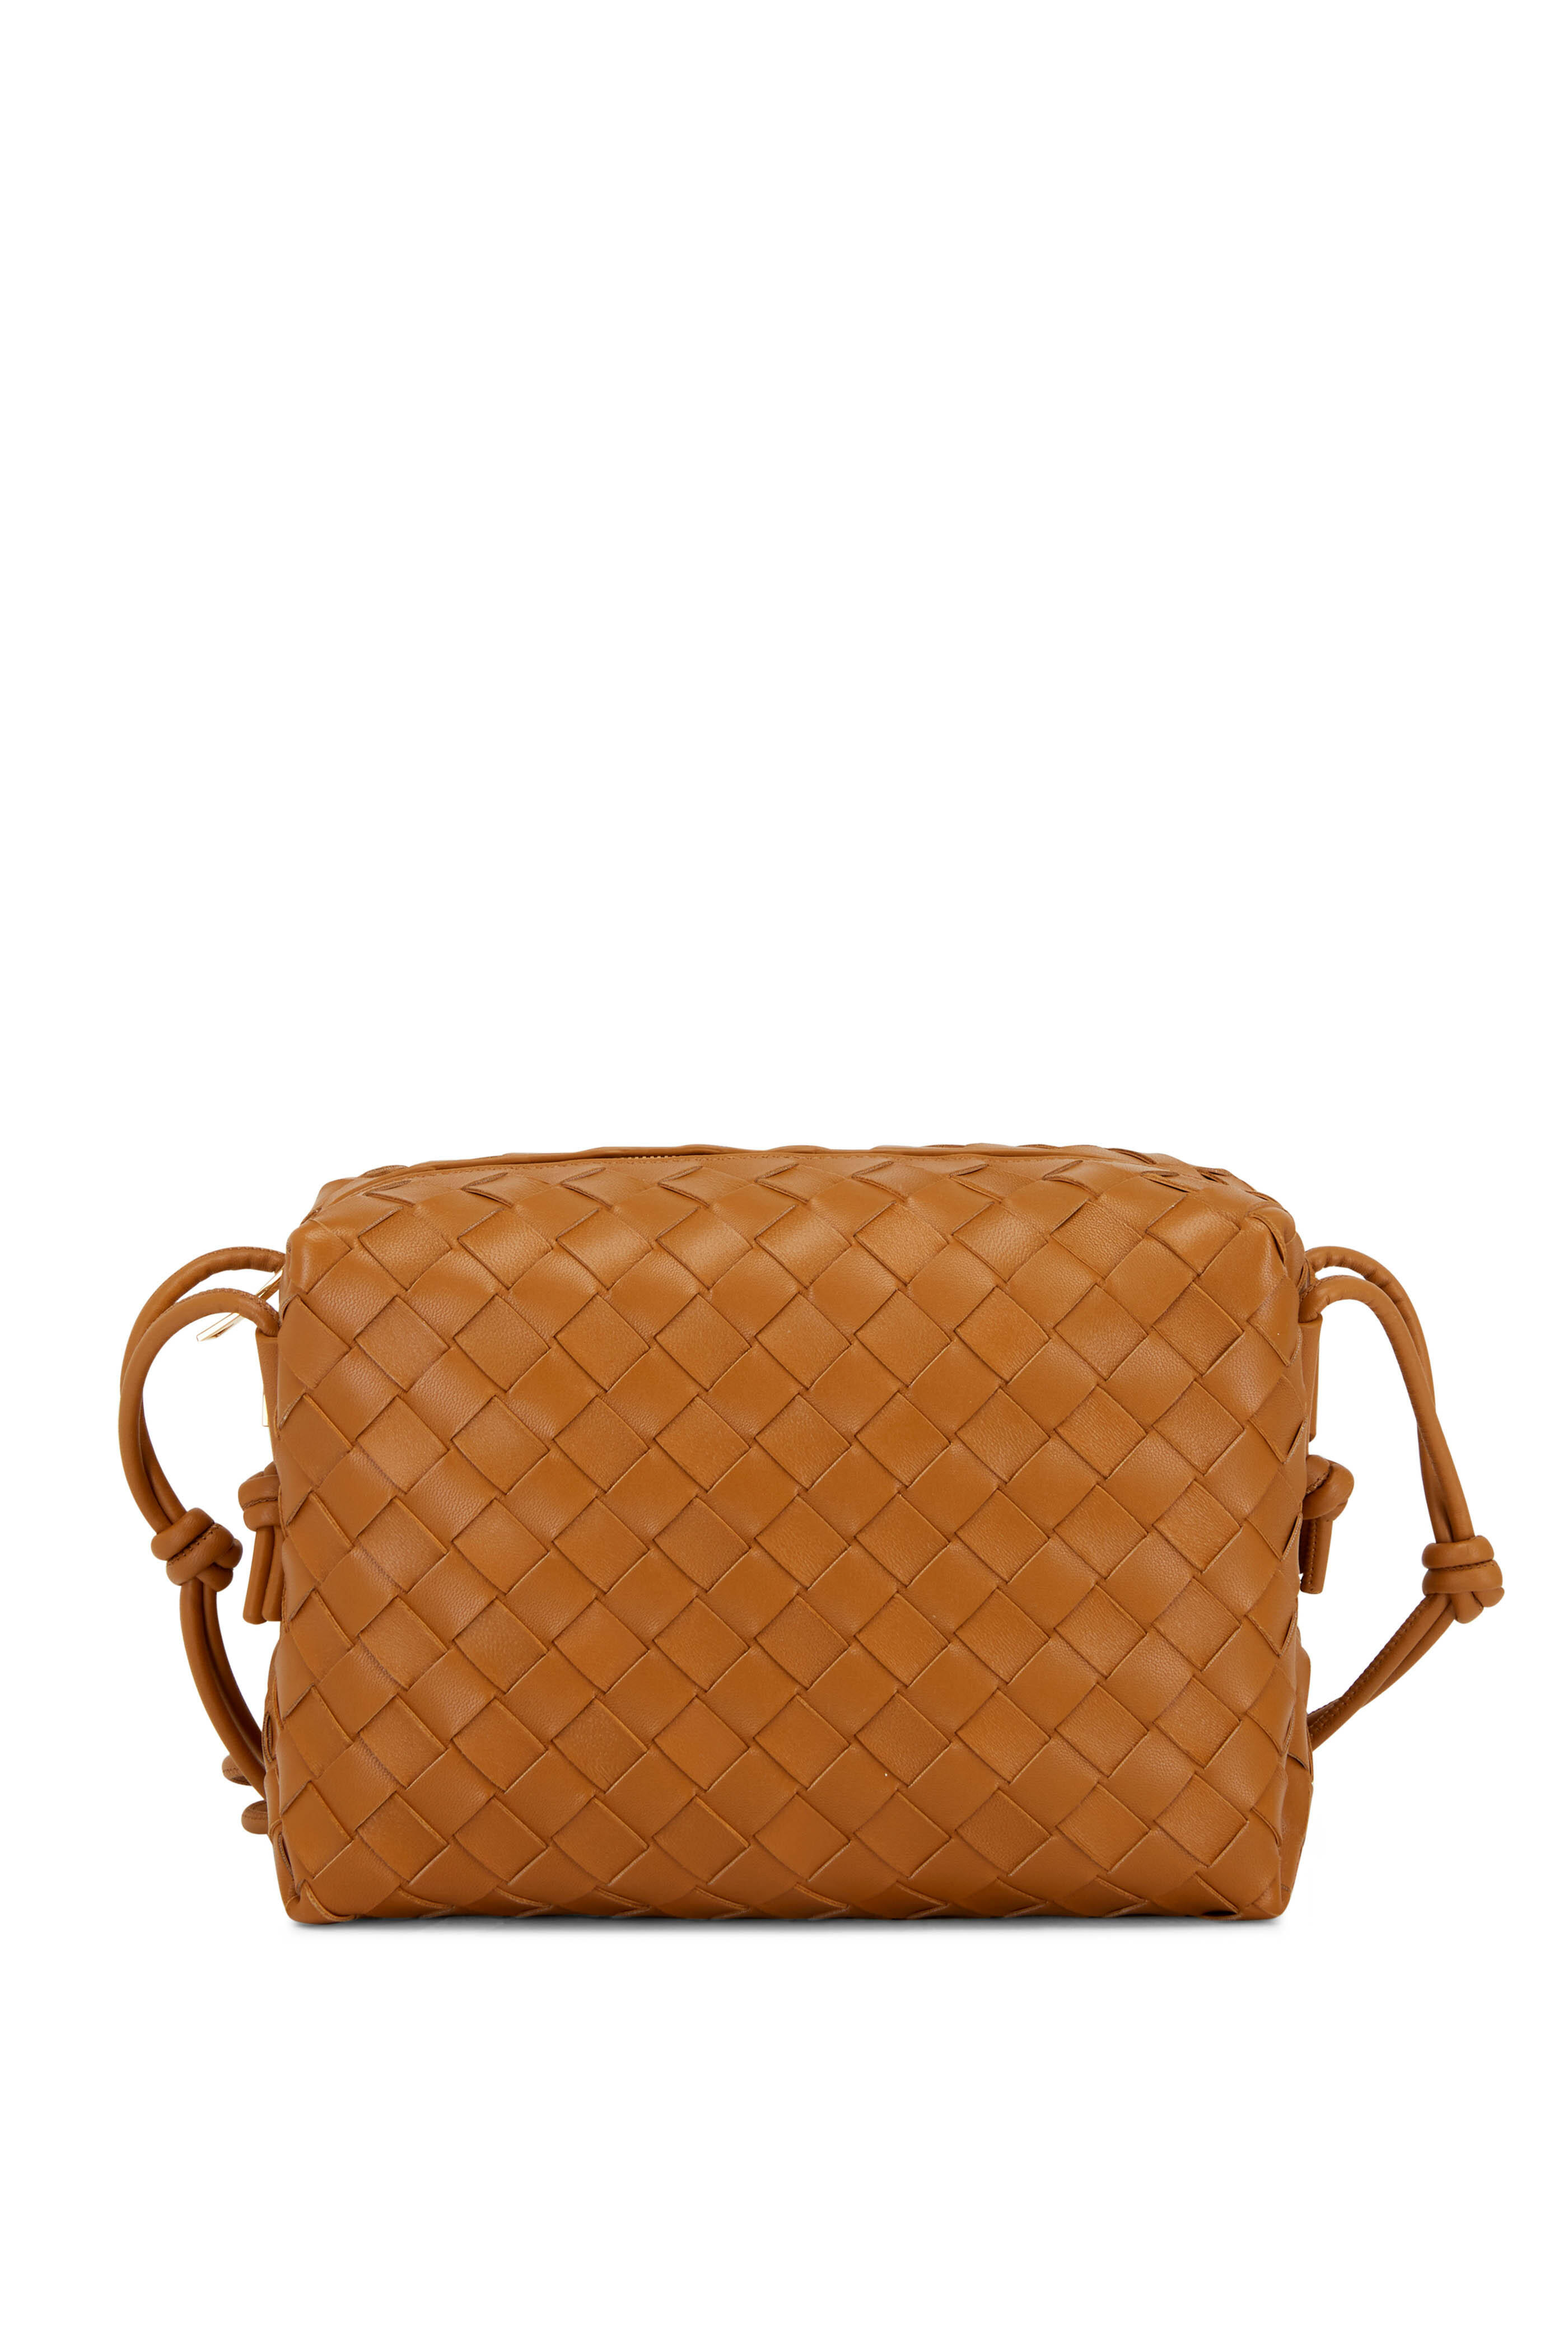 Bottega Veneta - Camel & Gold Small Woven Leather Shoulder Bag